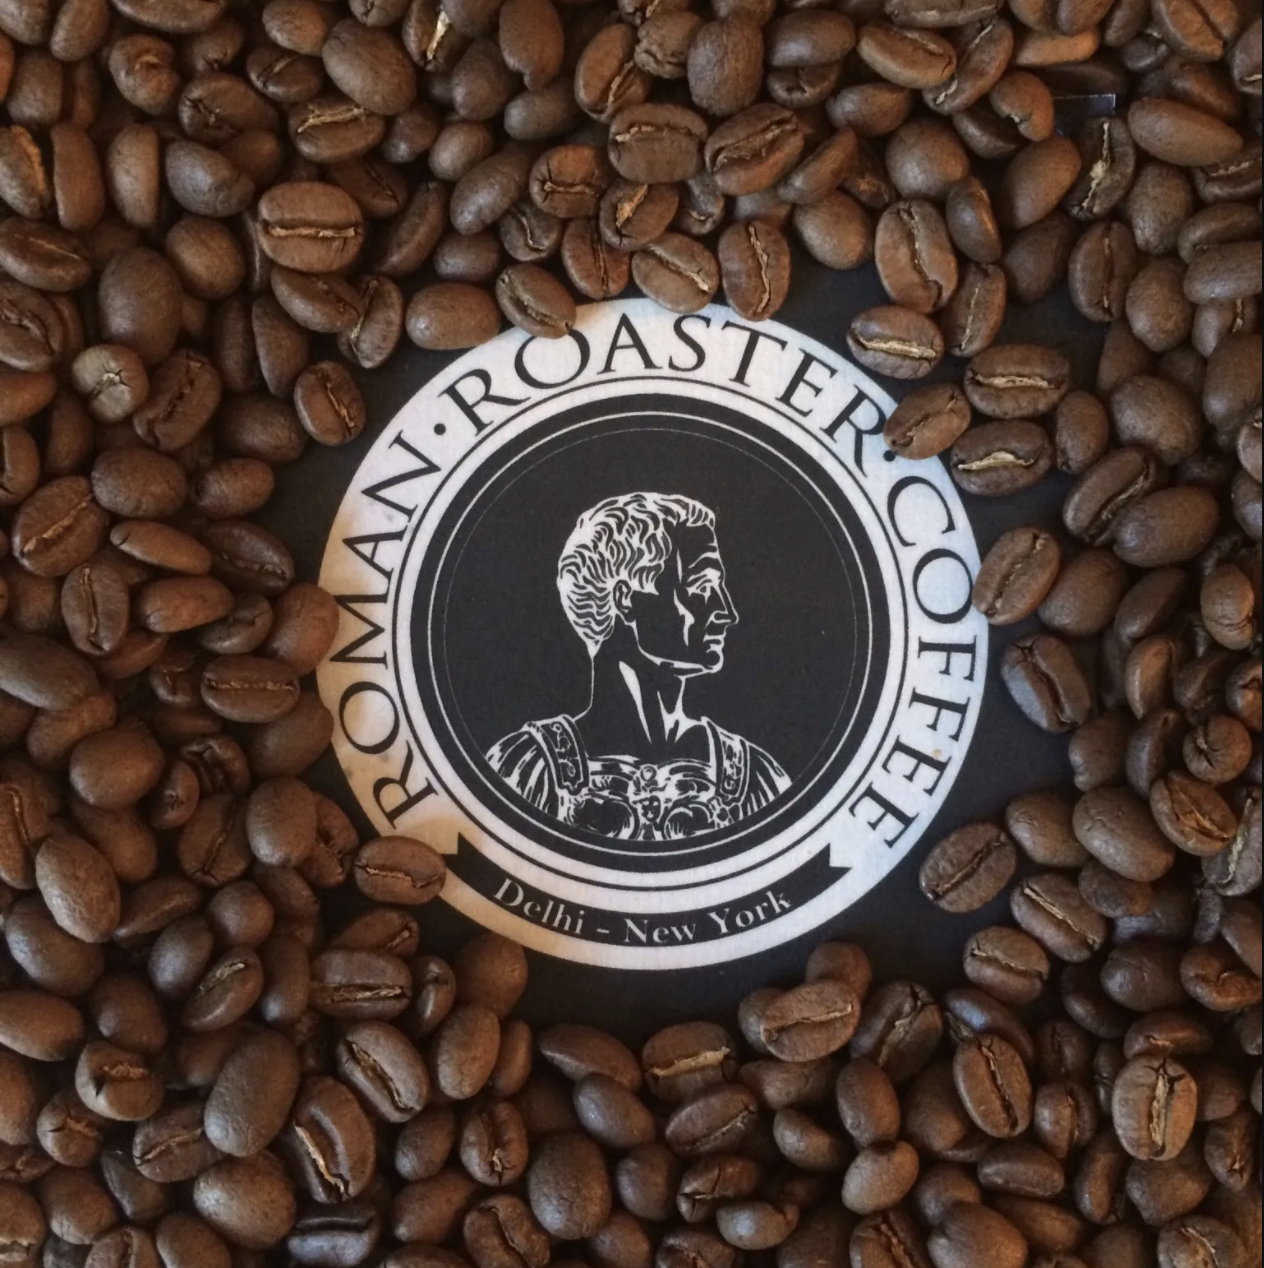 Roman Roaster Coffee